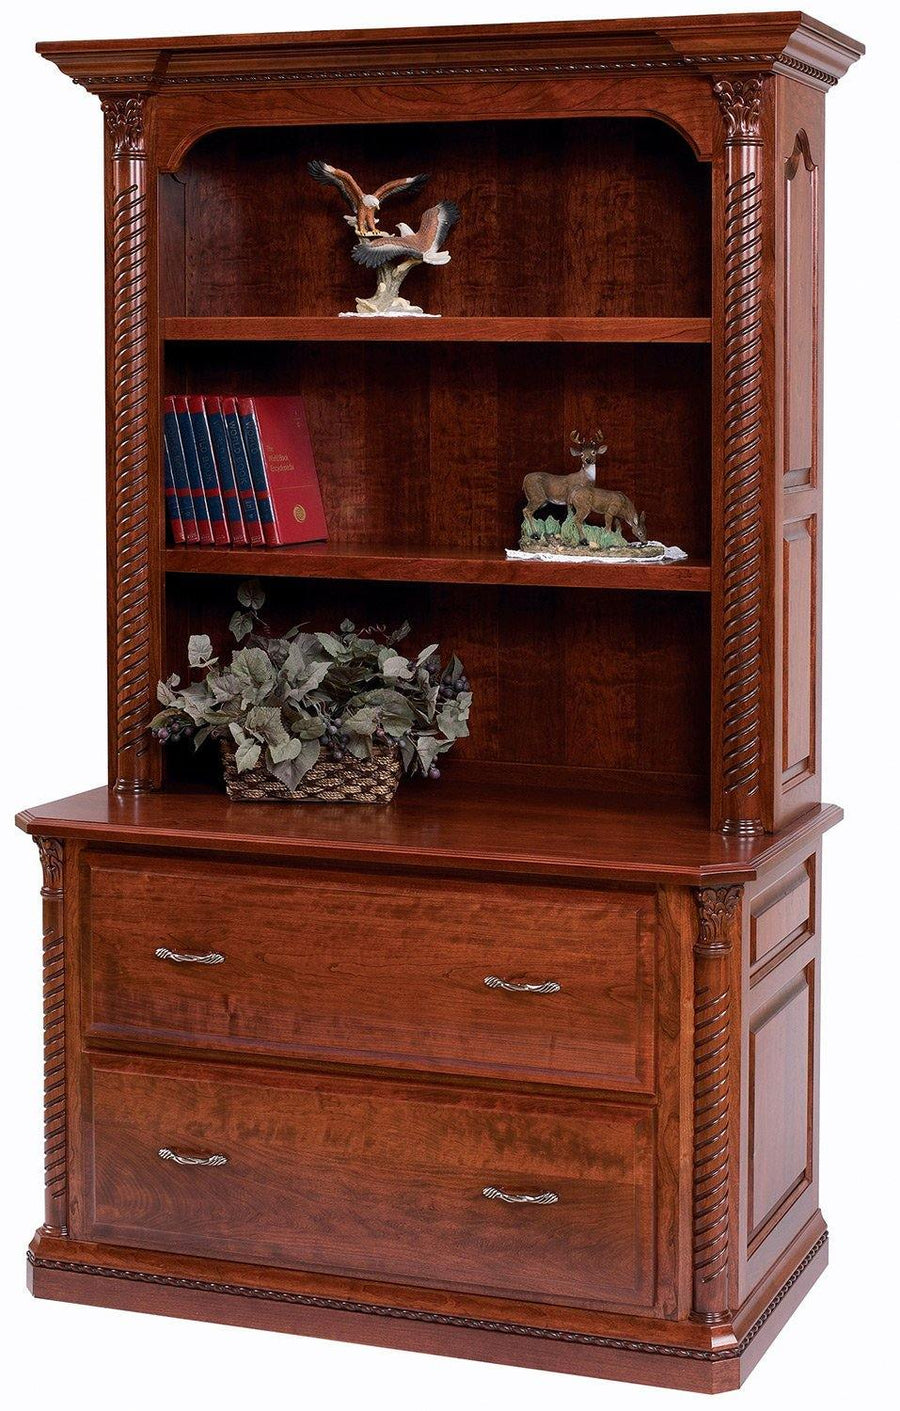 Lexington Amish Lateral File & Bookshelf - Foothills Amish Furniture